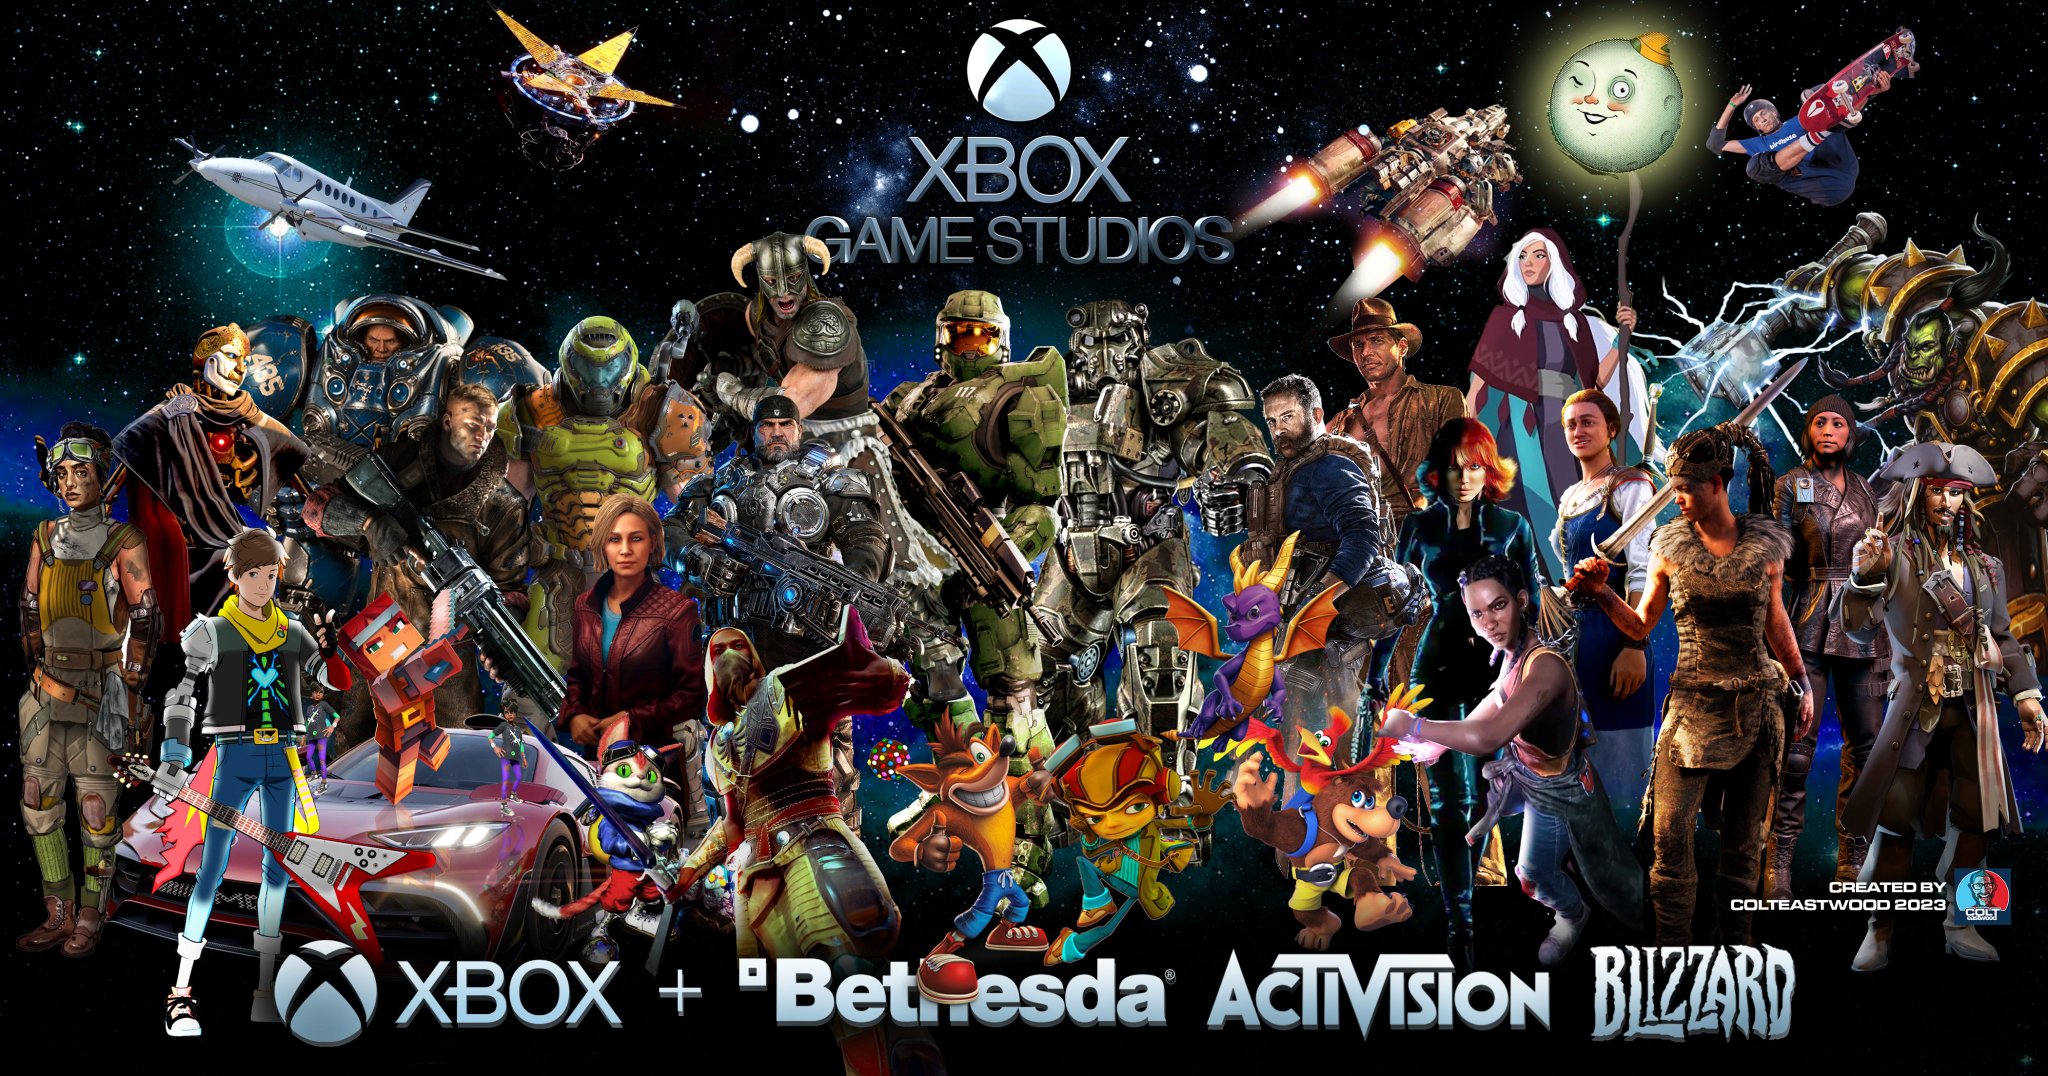 colteastwood on X: Xbox Game Studios Franchises in 4K #Xbox